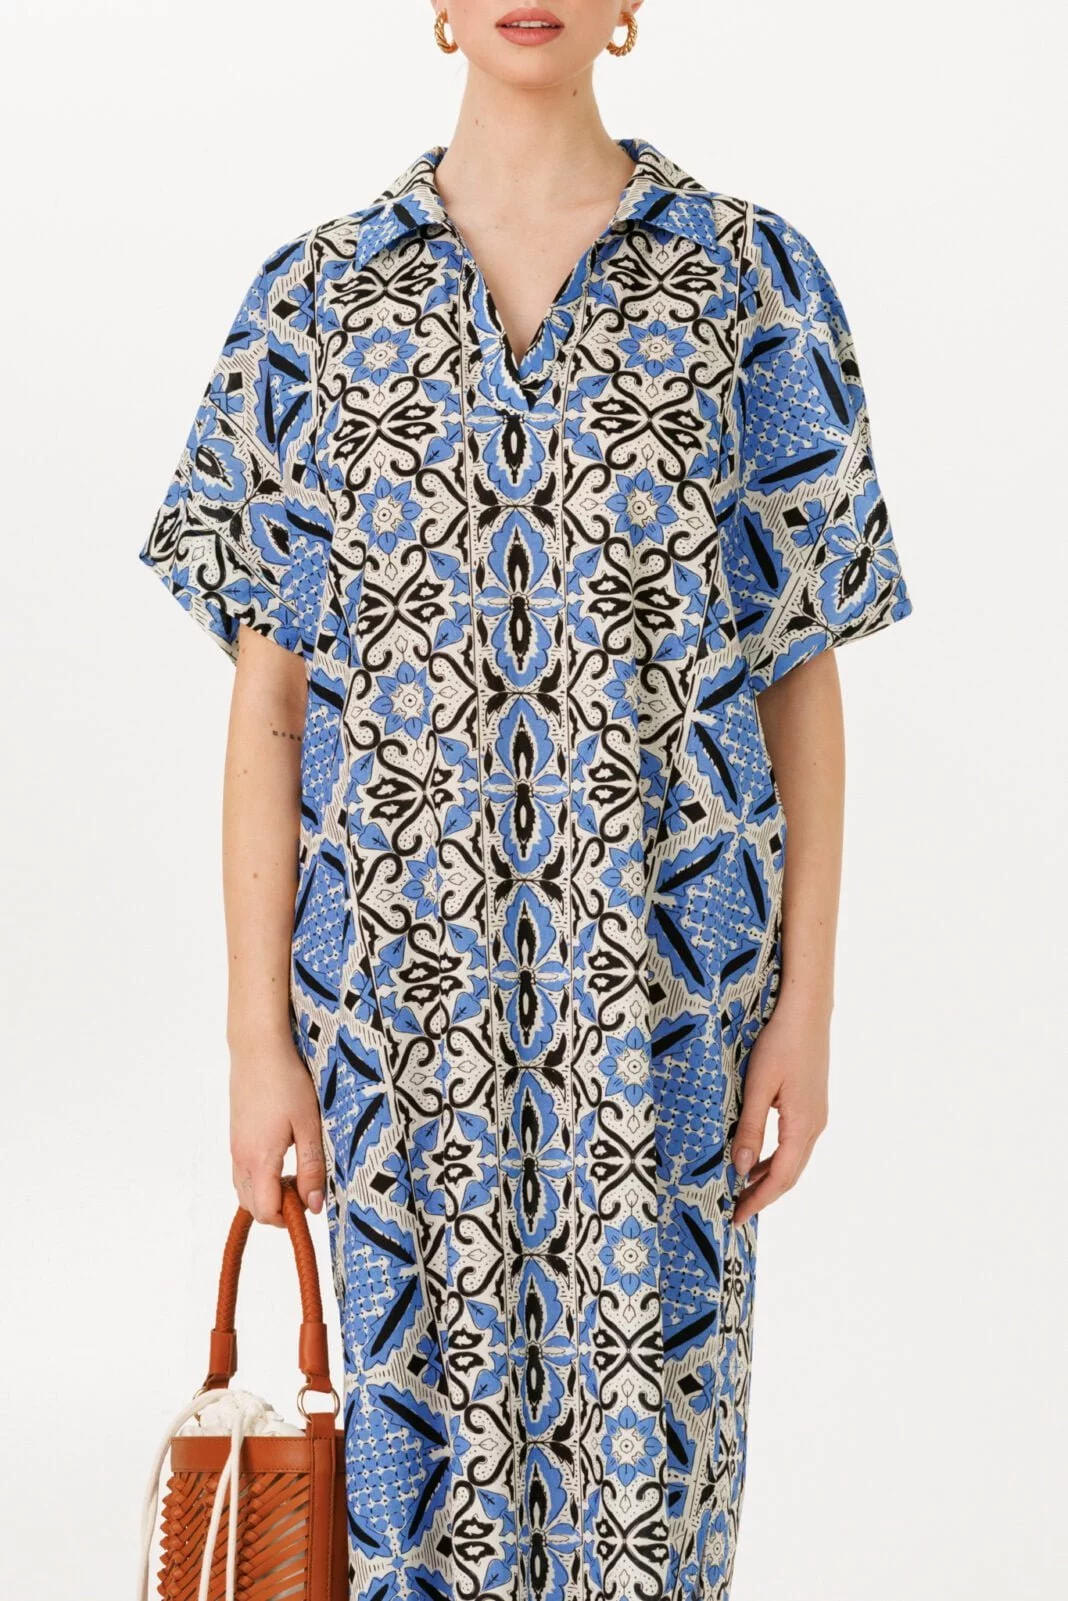 Stylish Blue Kaftan Dress with Shirt Collar - Mediterranean-Inspired Cotton Attire